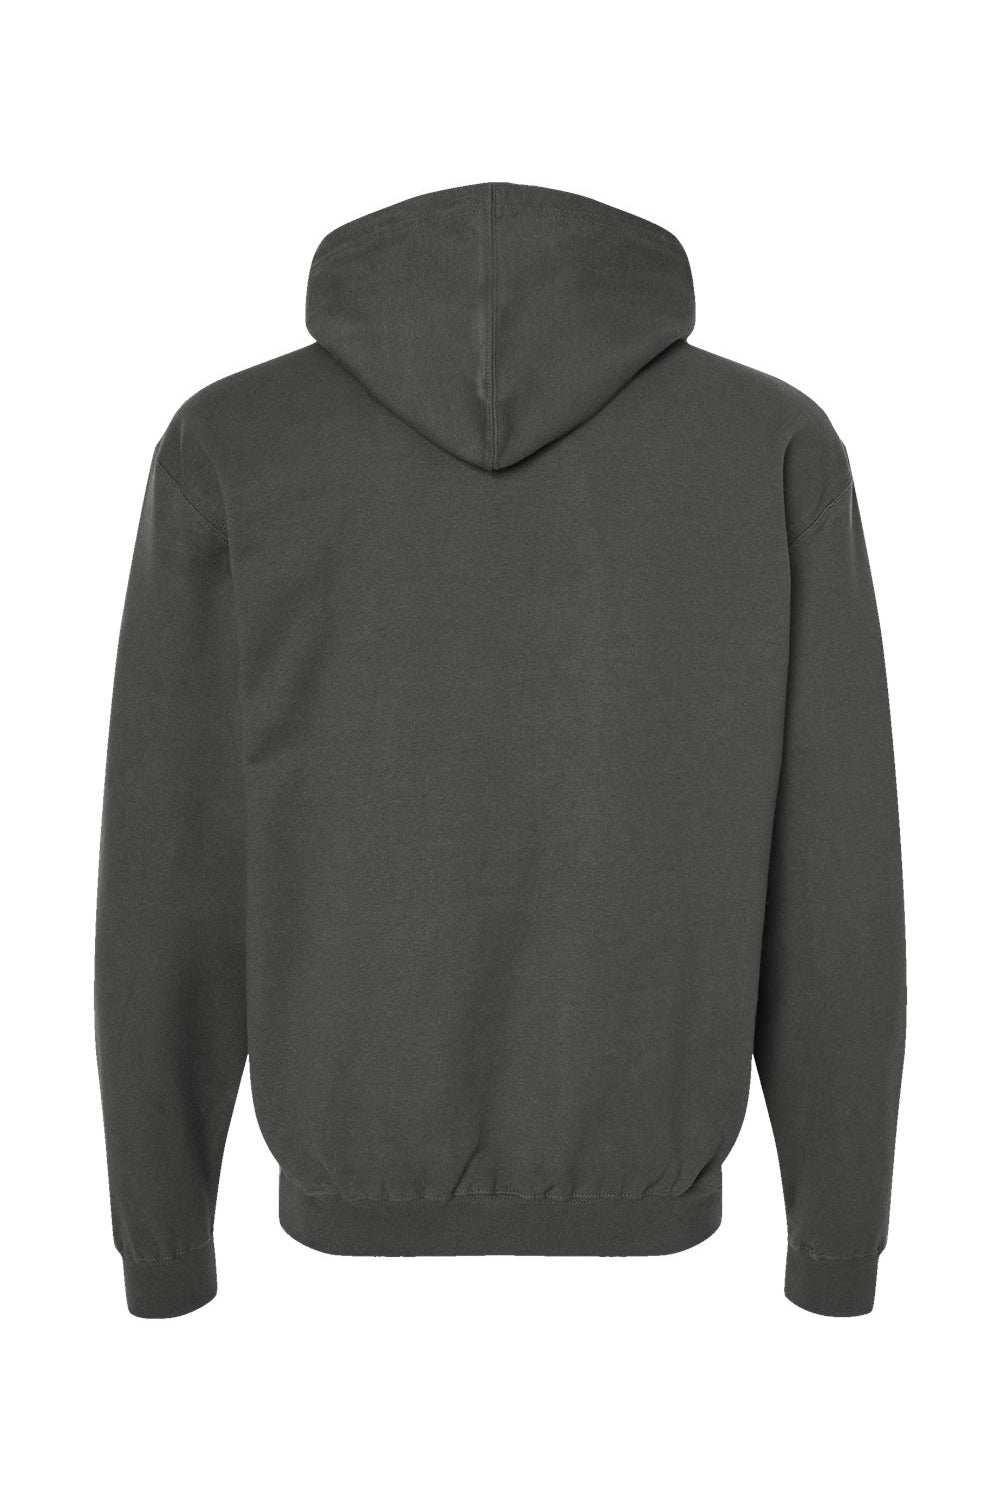 Tultex 320 Mens Fleece Hooded Sweatshirt Hoodie Charcoal Grey Flat Back